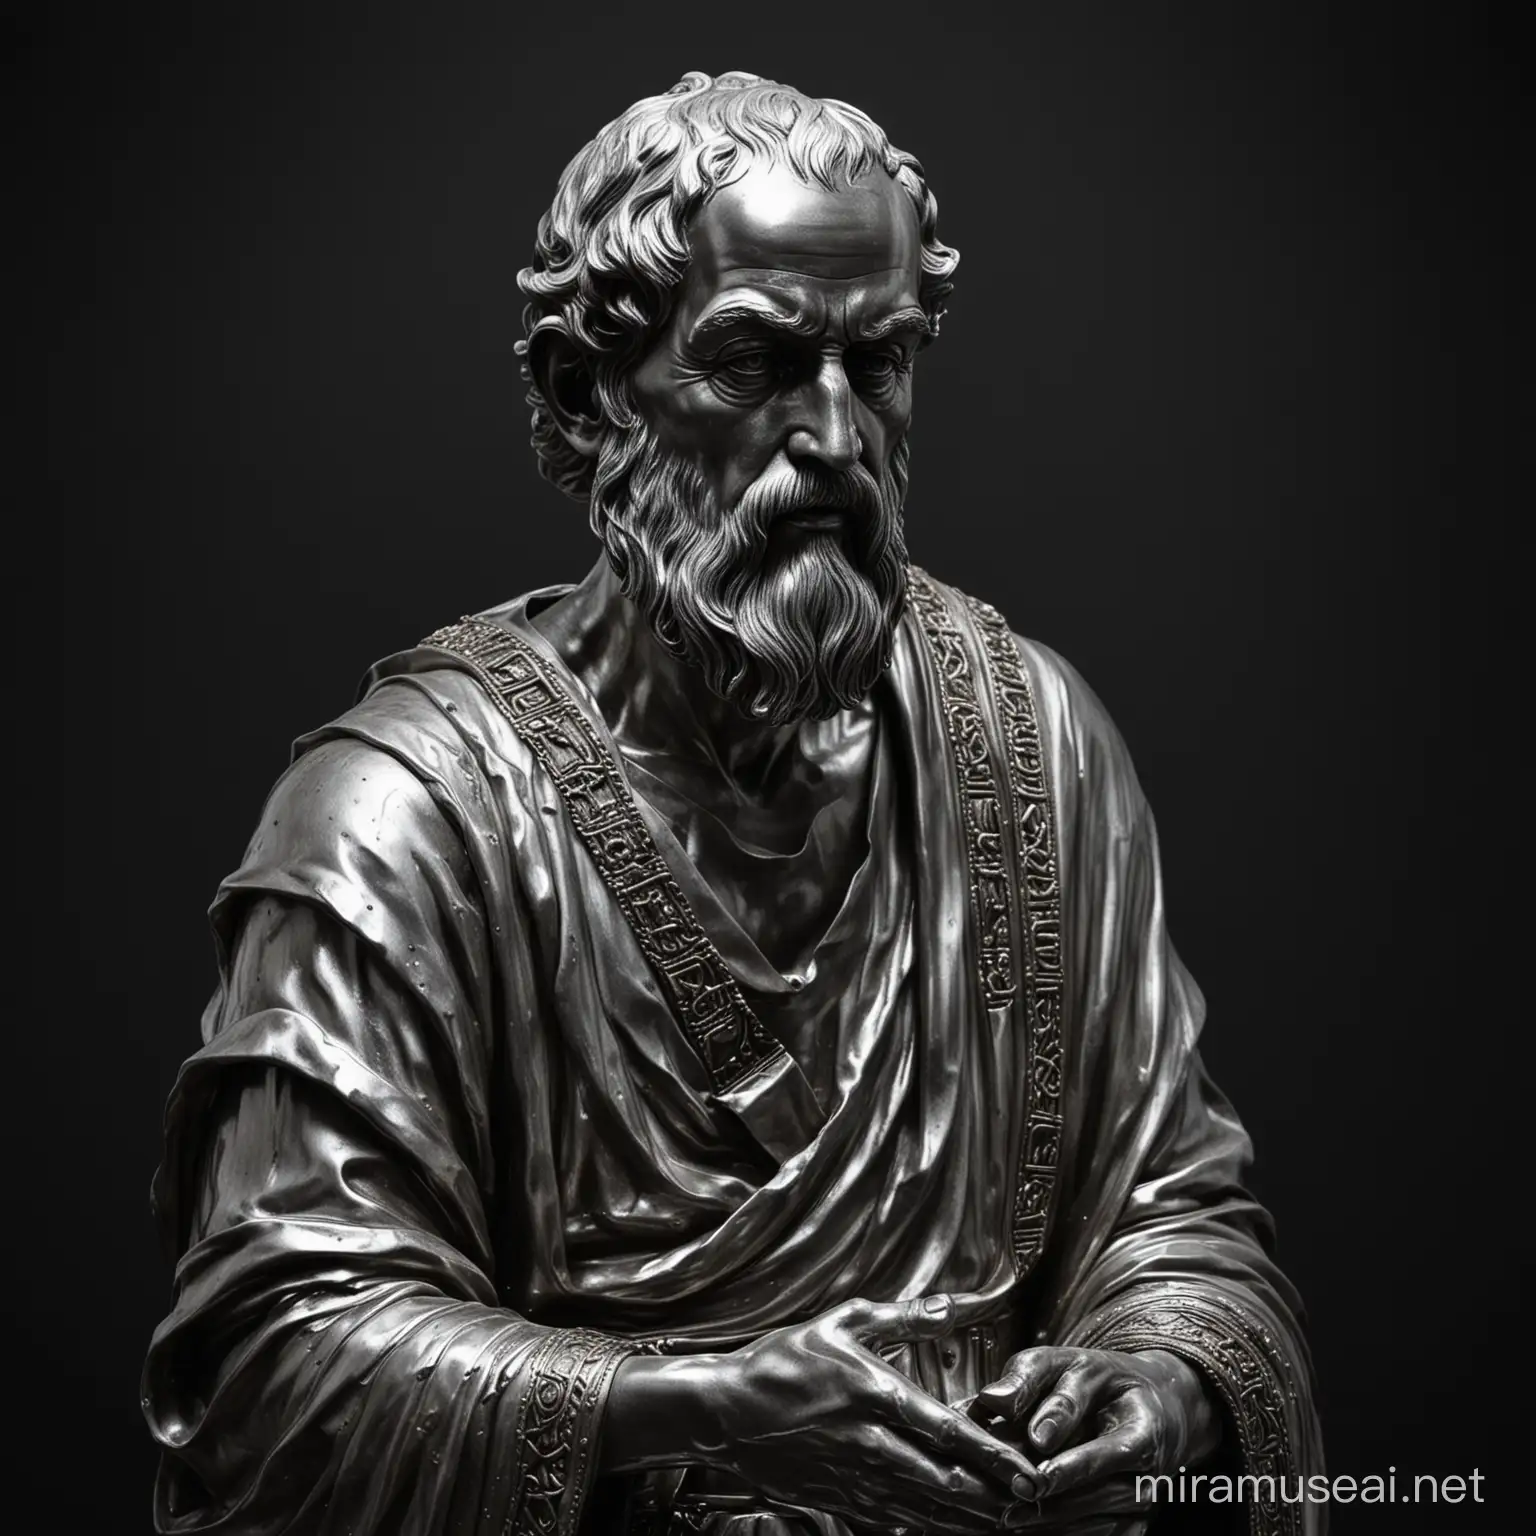 Silver Liquid Metal Ancient Philosopher Statue on Black Background